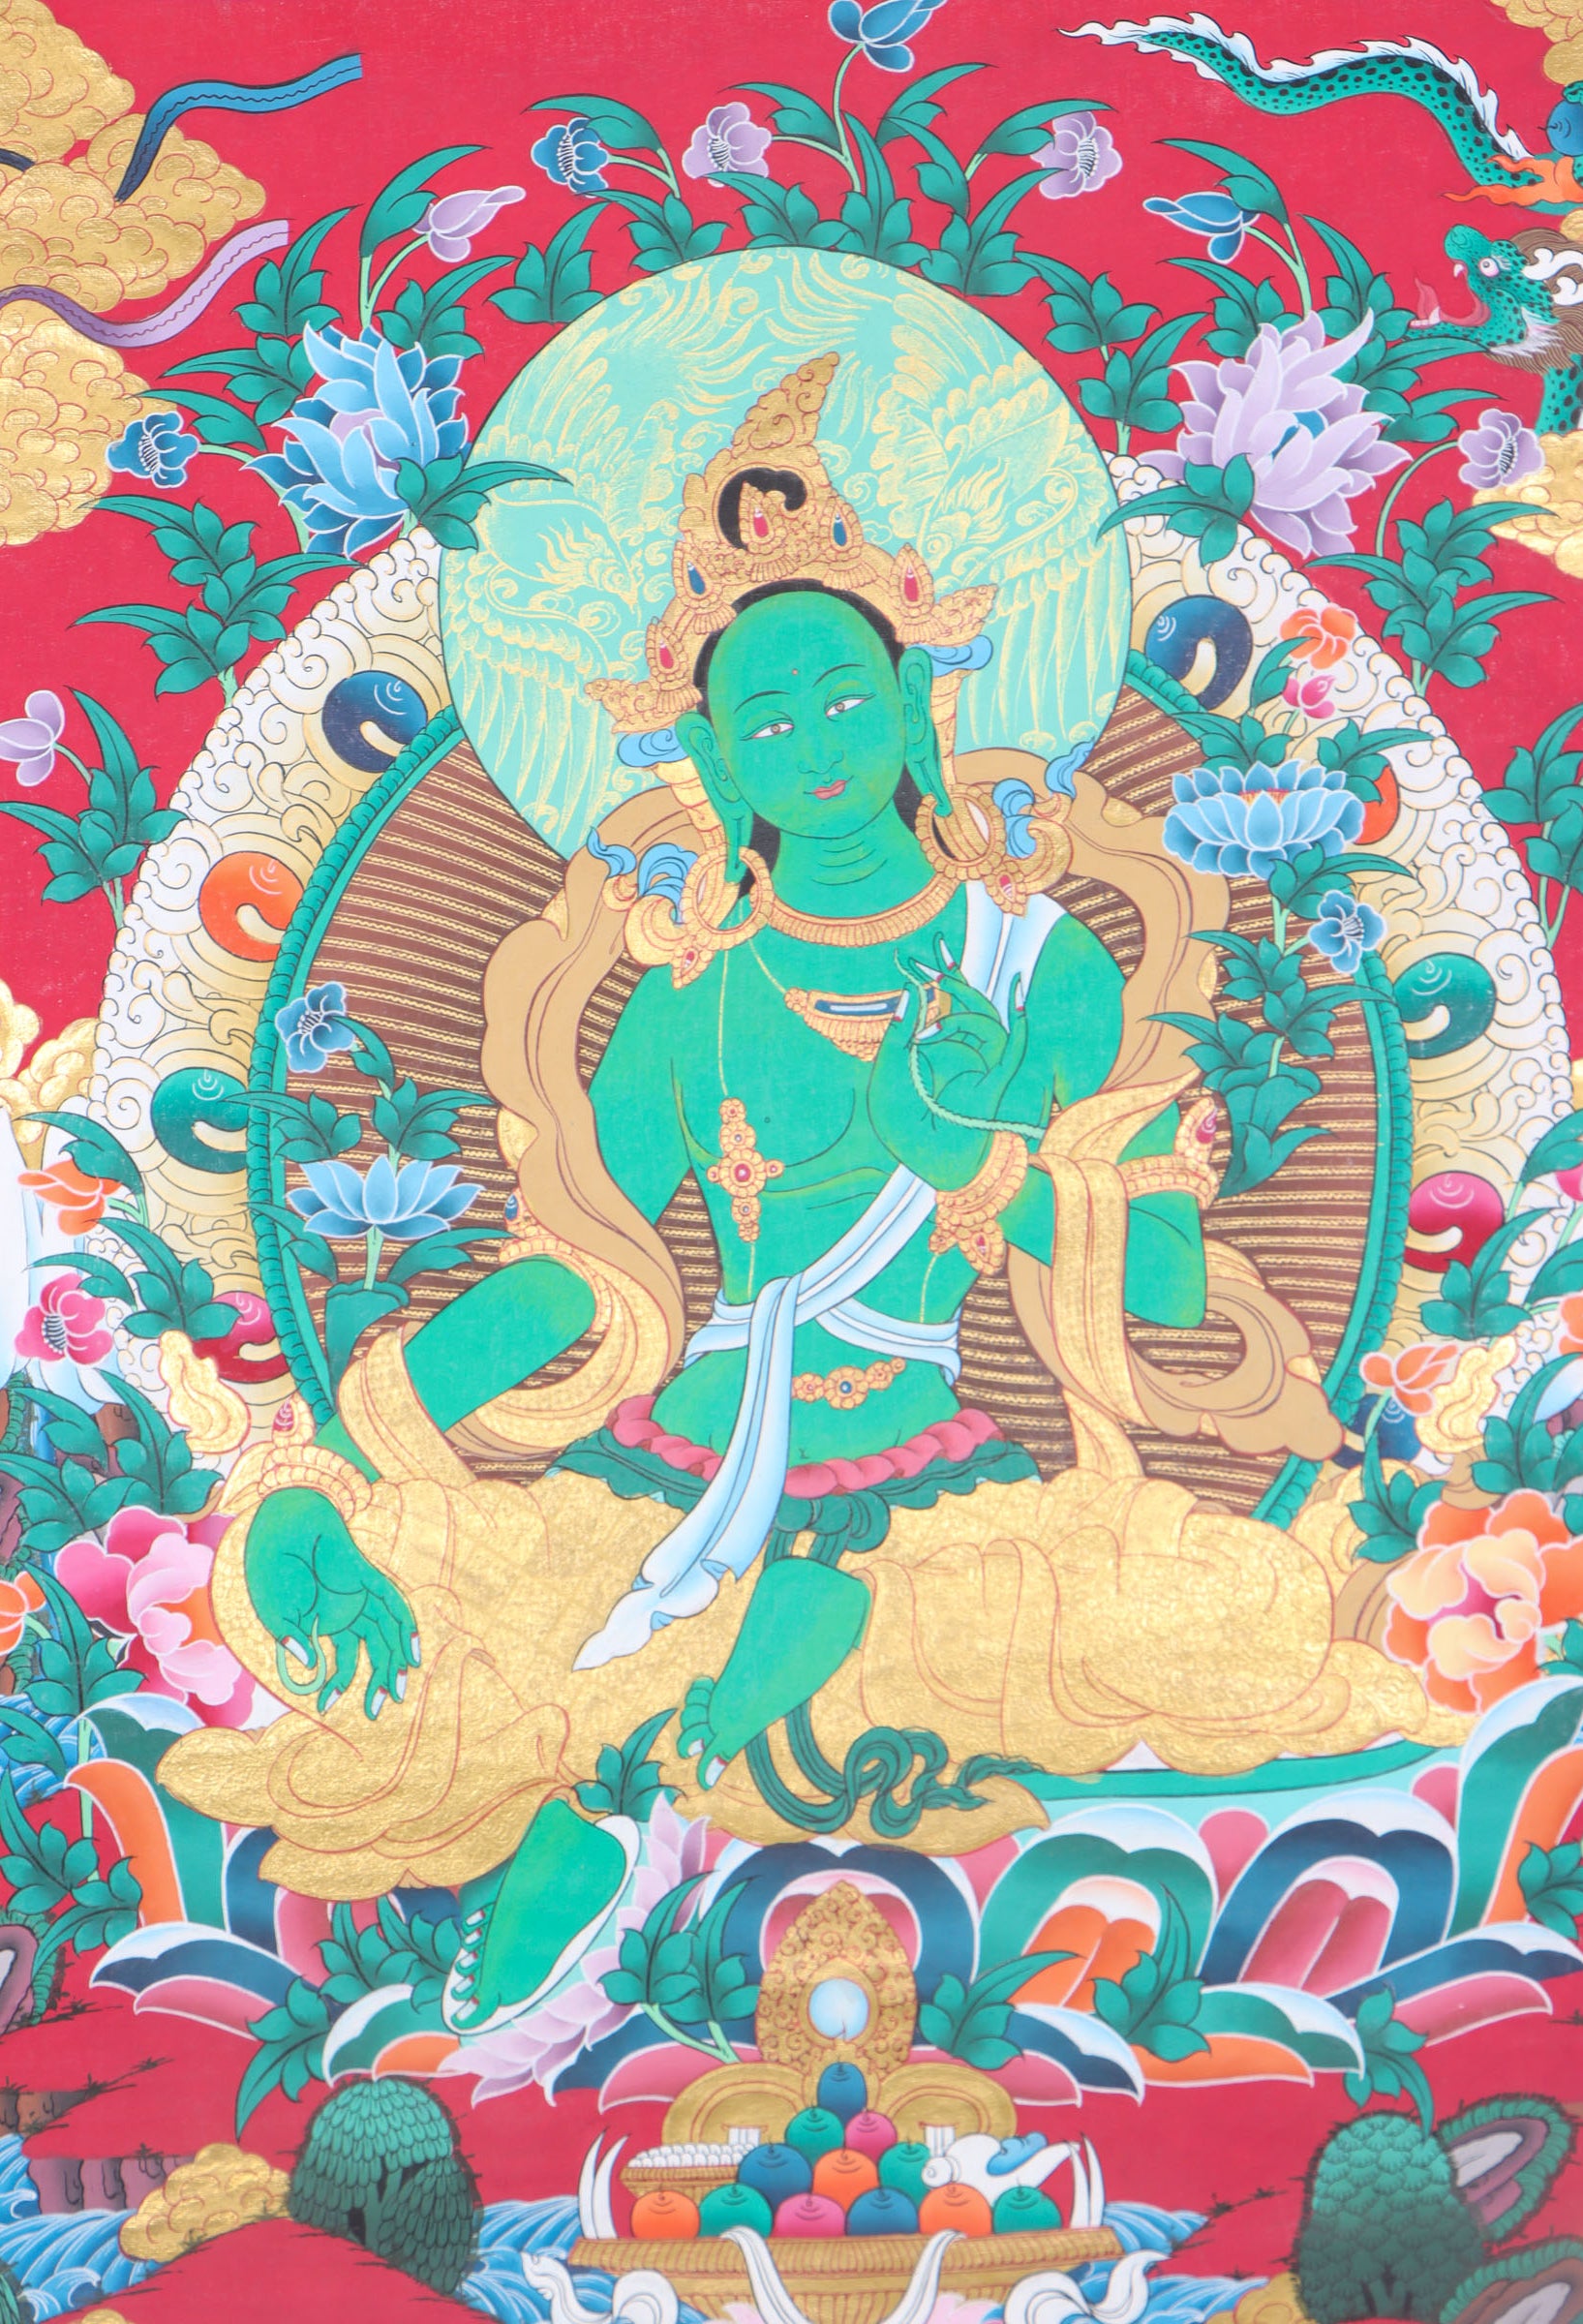 Green Tara Thangka Painting for religious rituals.